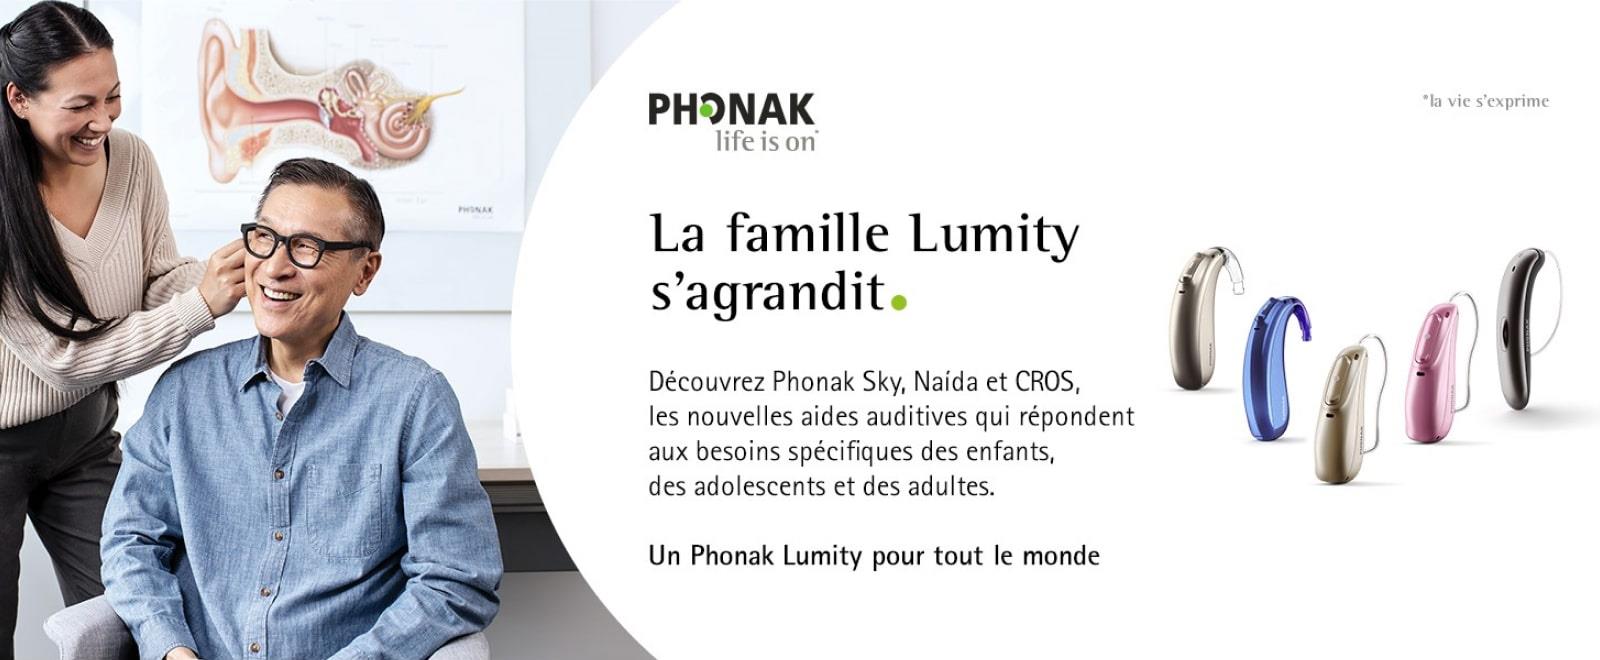 Phonak - La famille Lumity s'agrandit